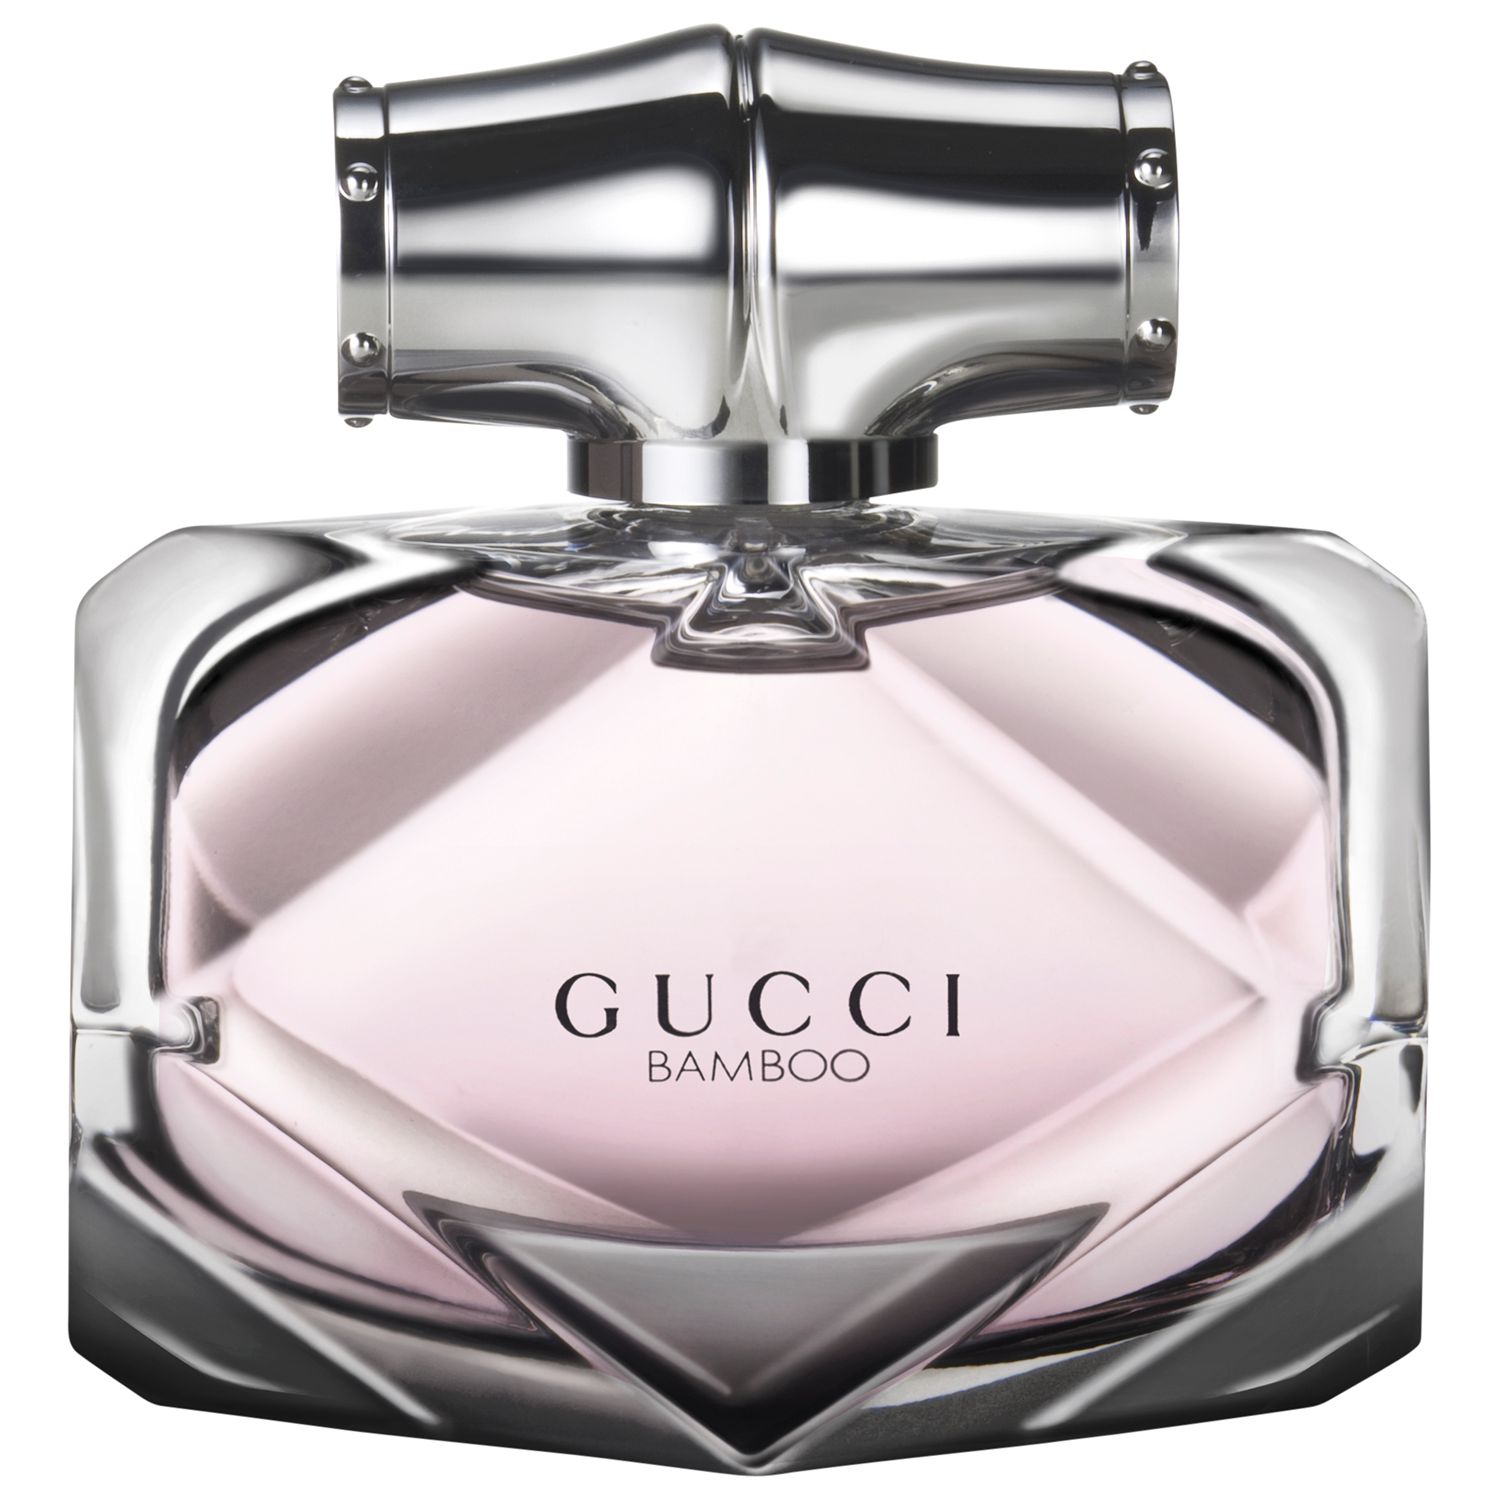 Gucci Bamboo Eau de Parfum, 30ml at John Lewis &